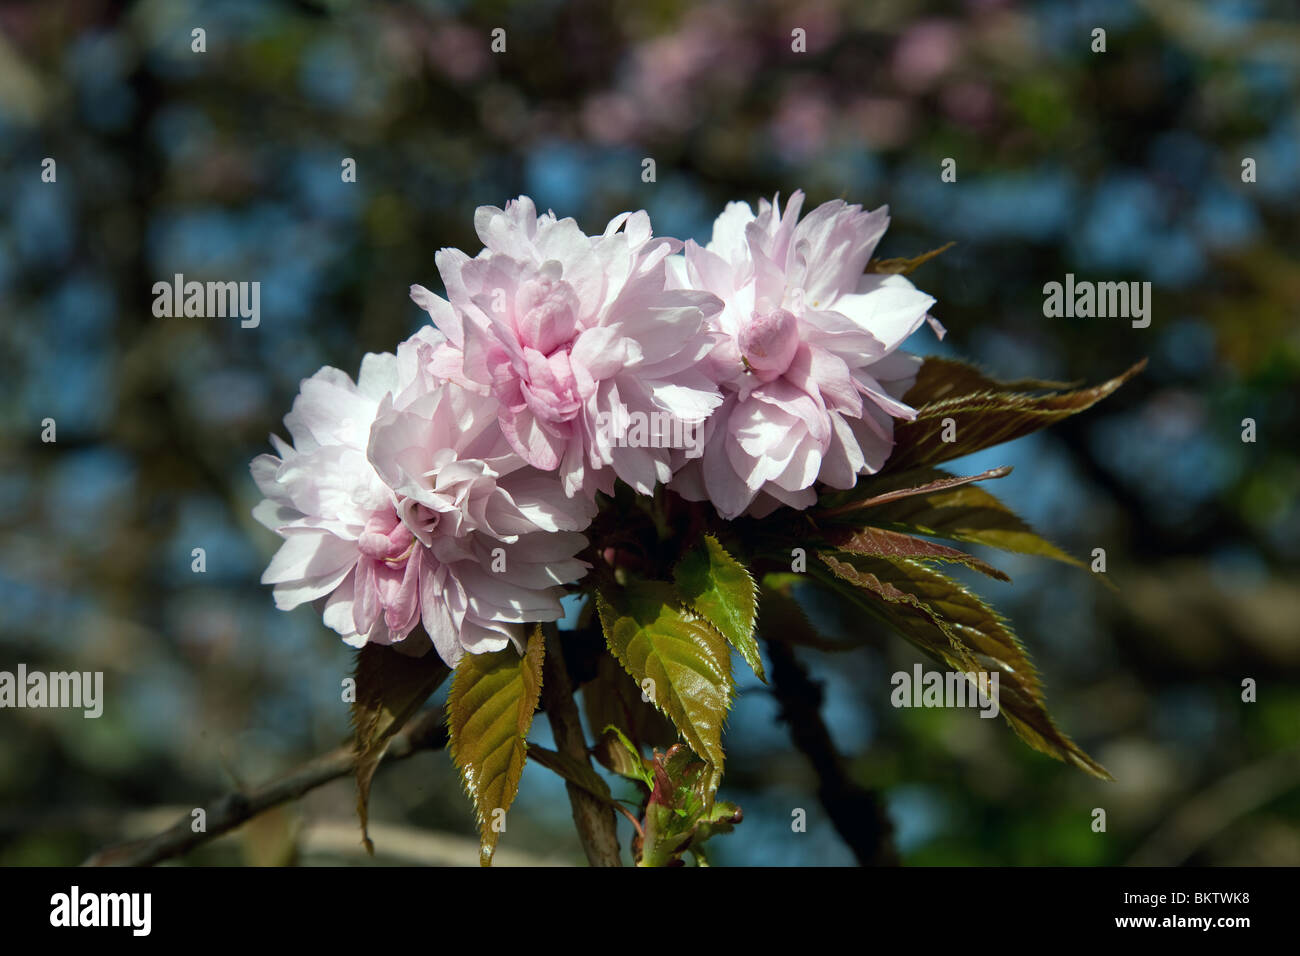 An ornamental cherry blossom tree in full bloom in a Devon, UK garden. Stock Photo